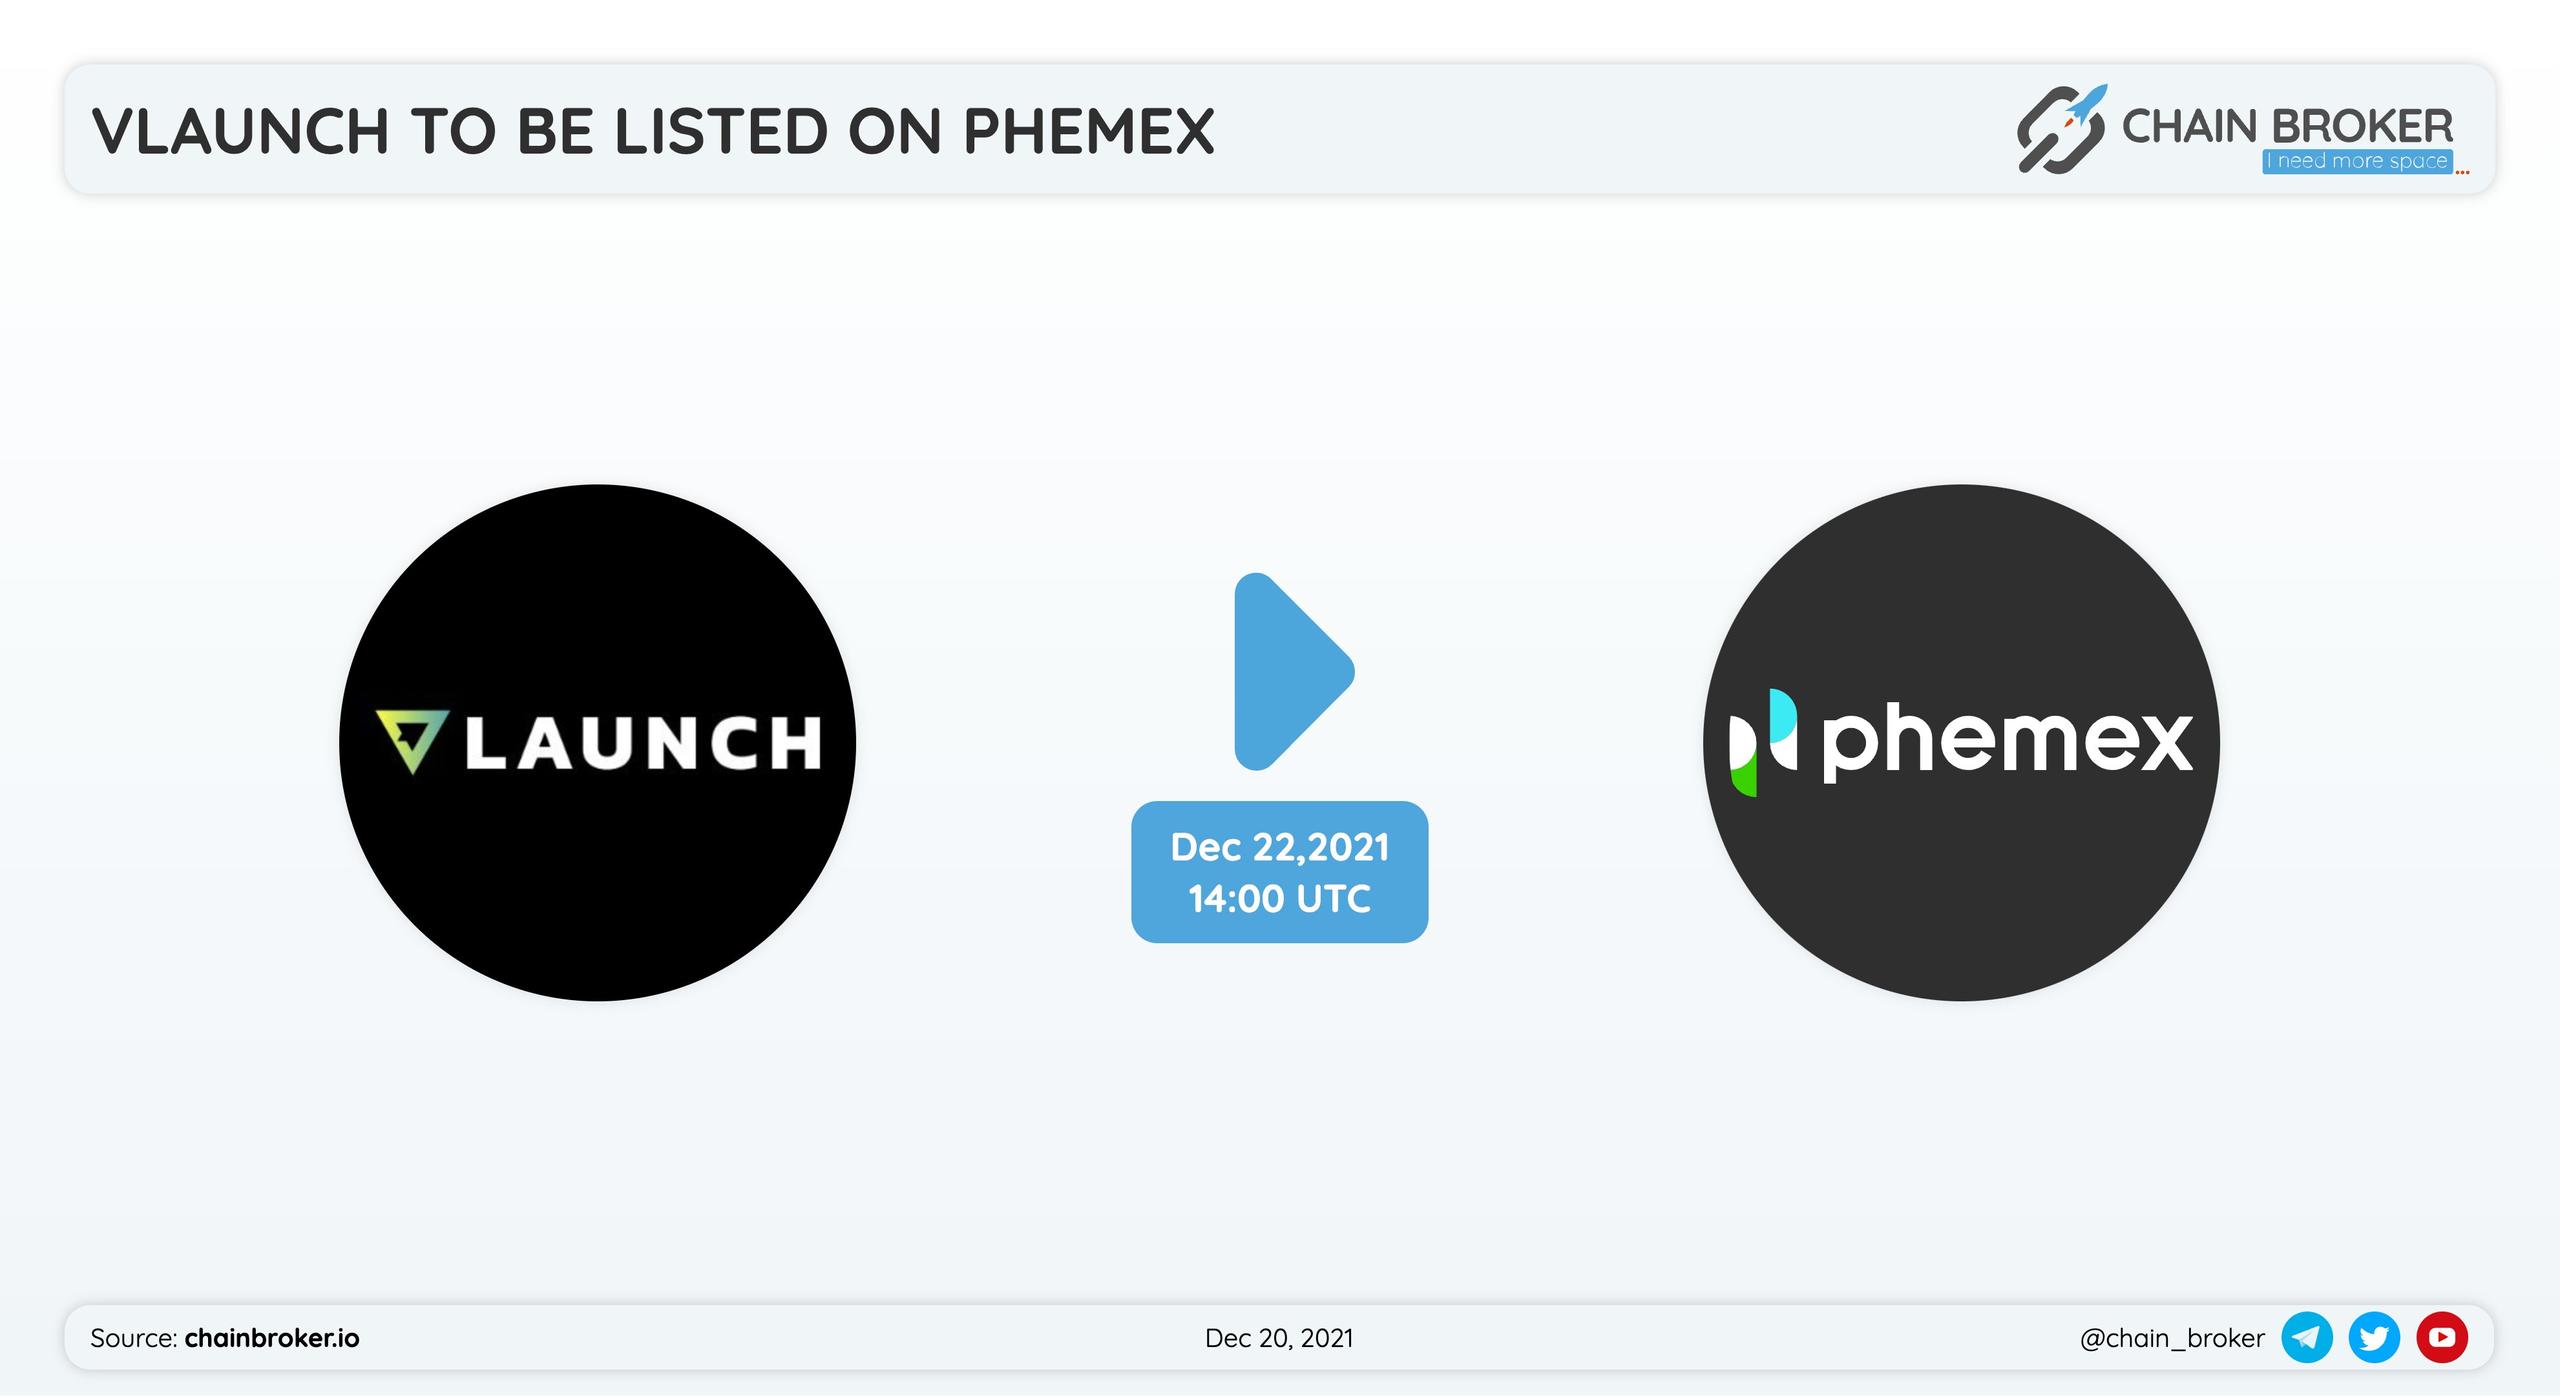 VLaunch has announced its listing on Phemex.